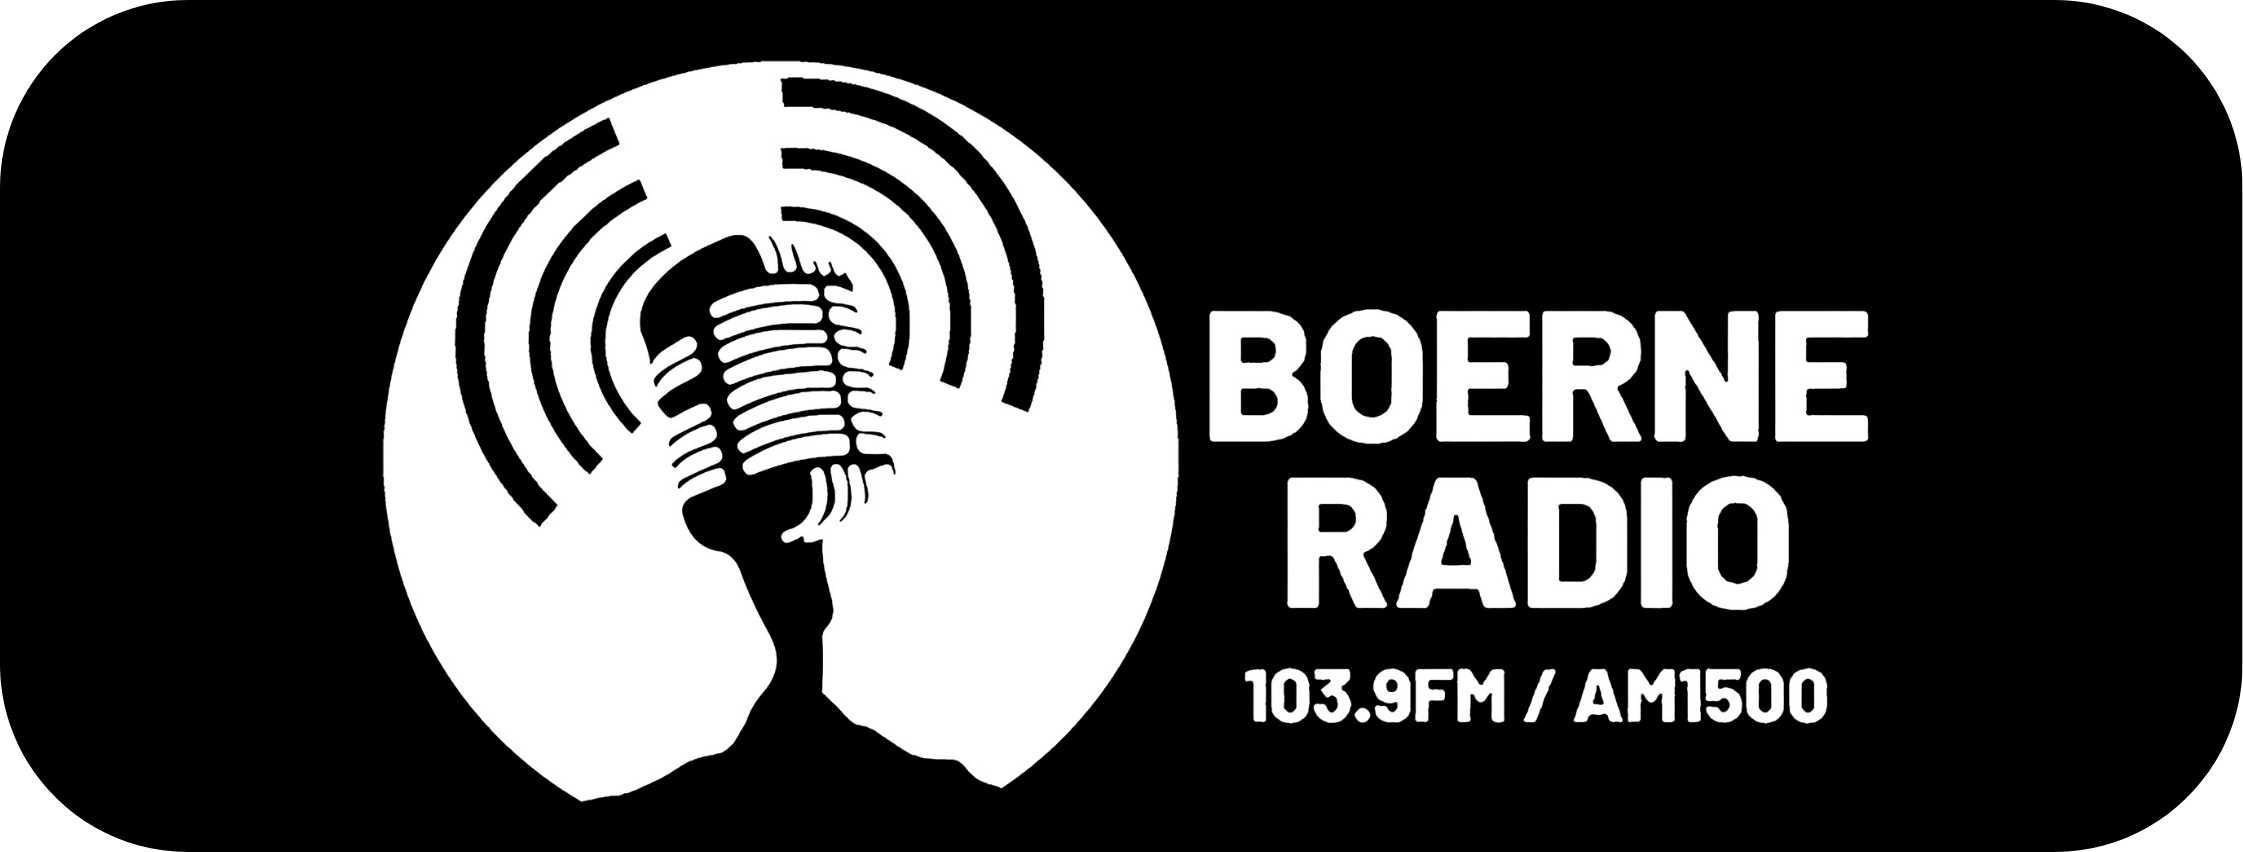 Boerne Radio Building Texas Ep 44 - ABKSNA, James Rice